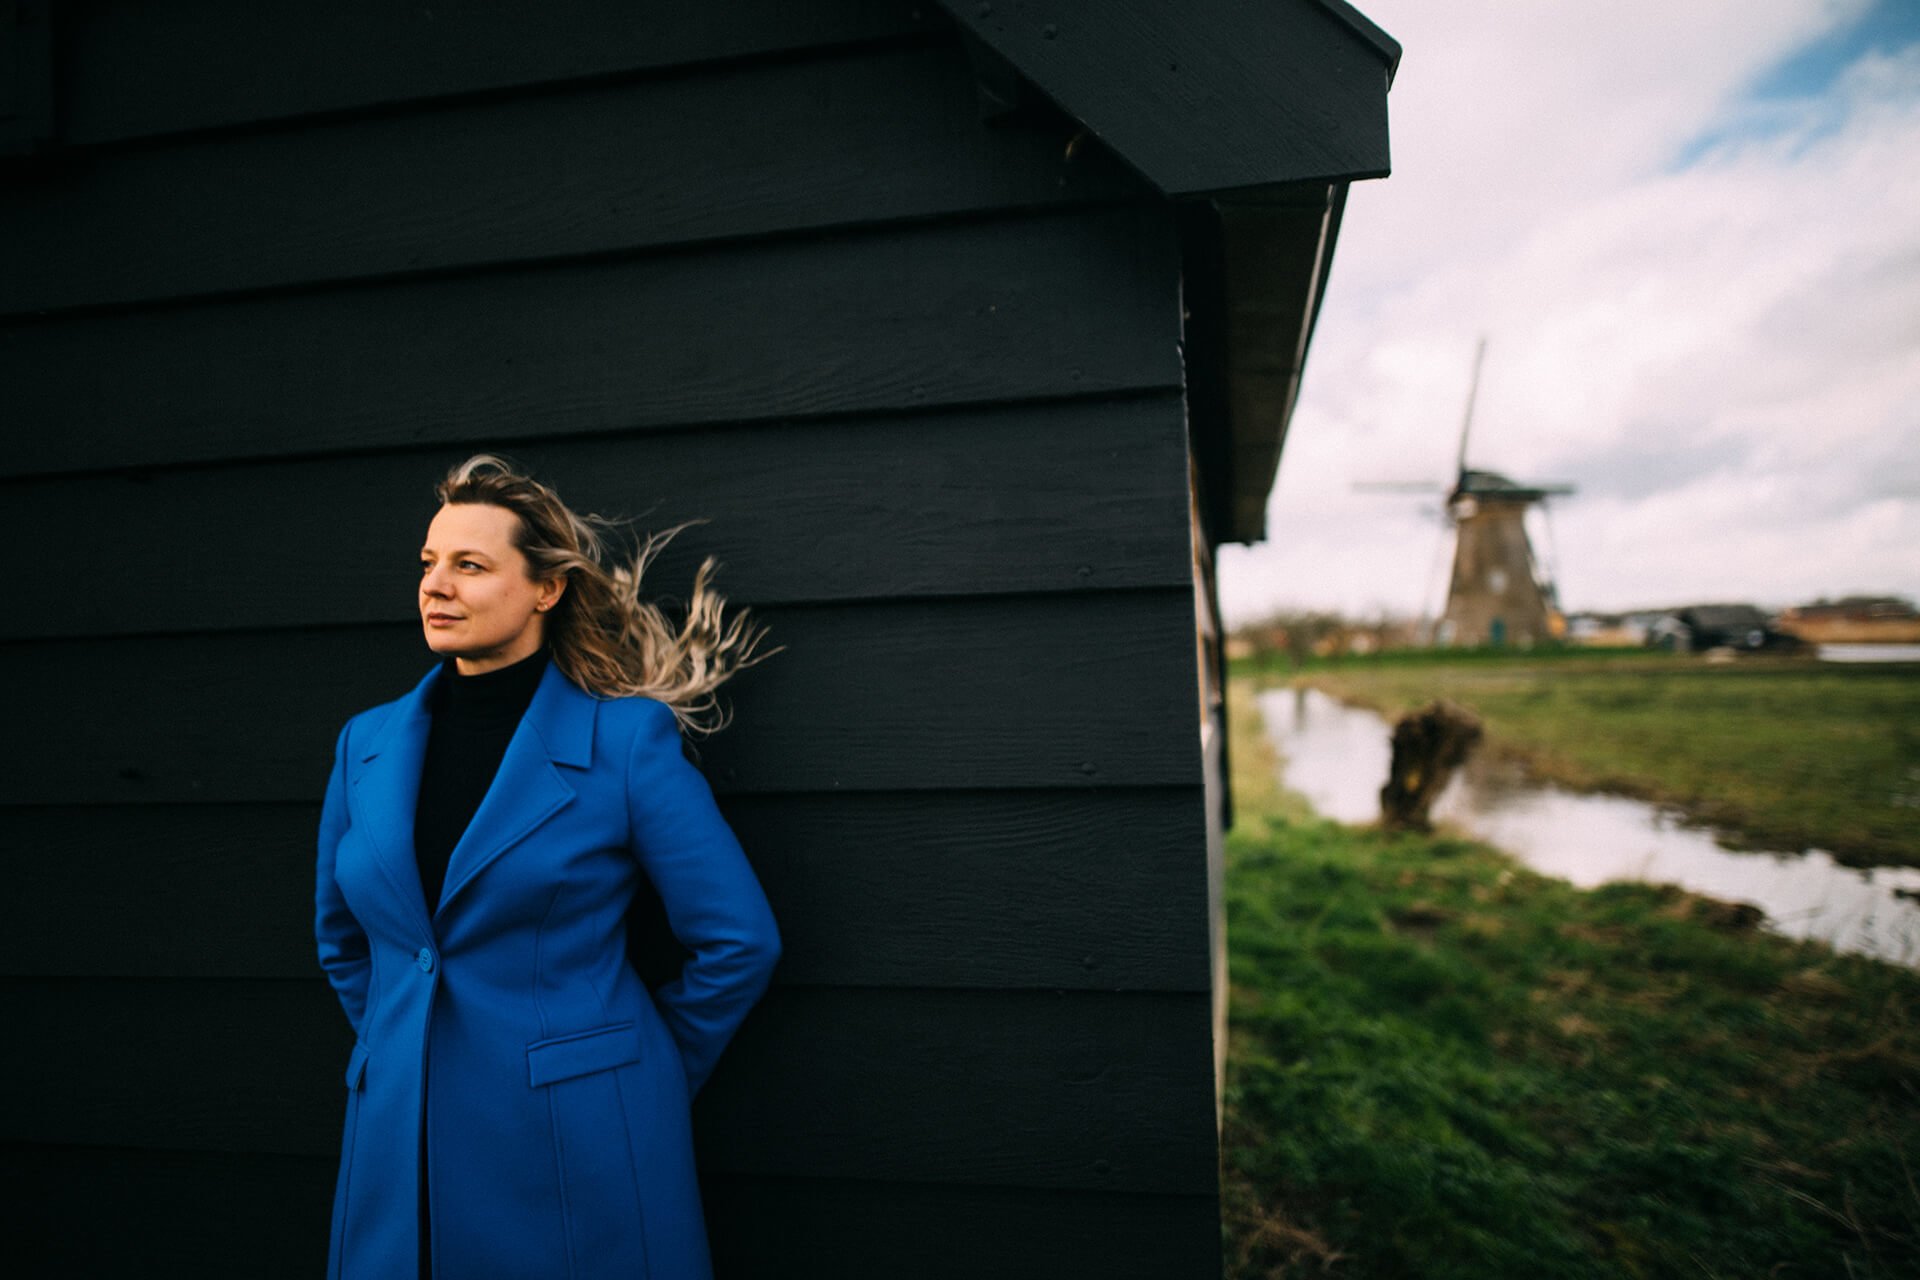 Photo Shoot Kinderdijk, Dutch Windmills, Portrait Photographer